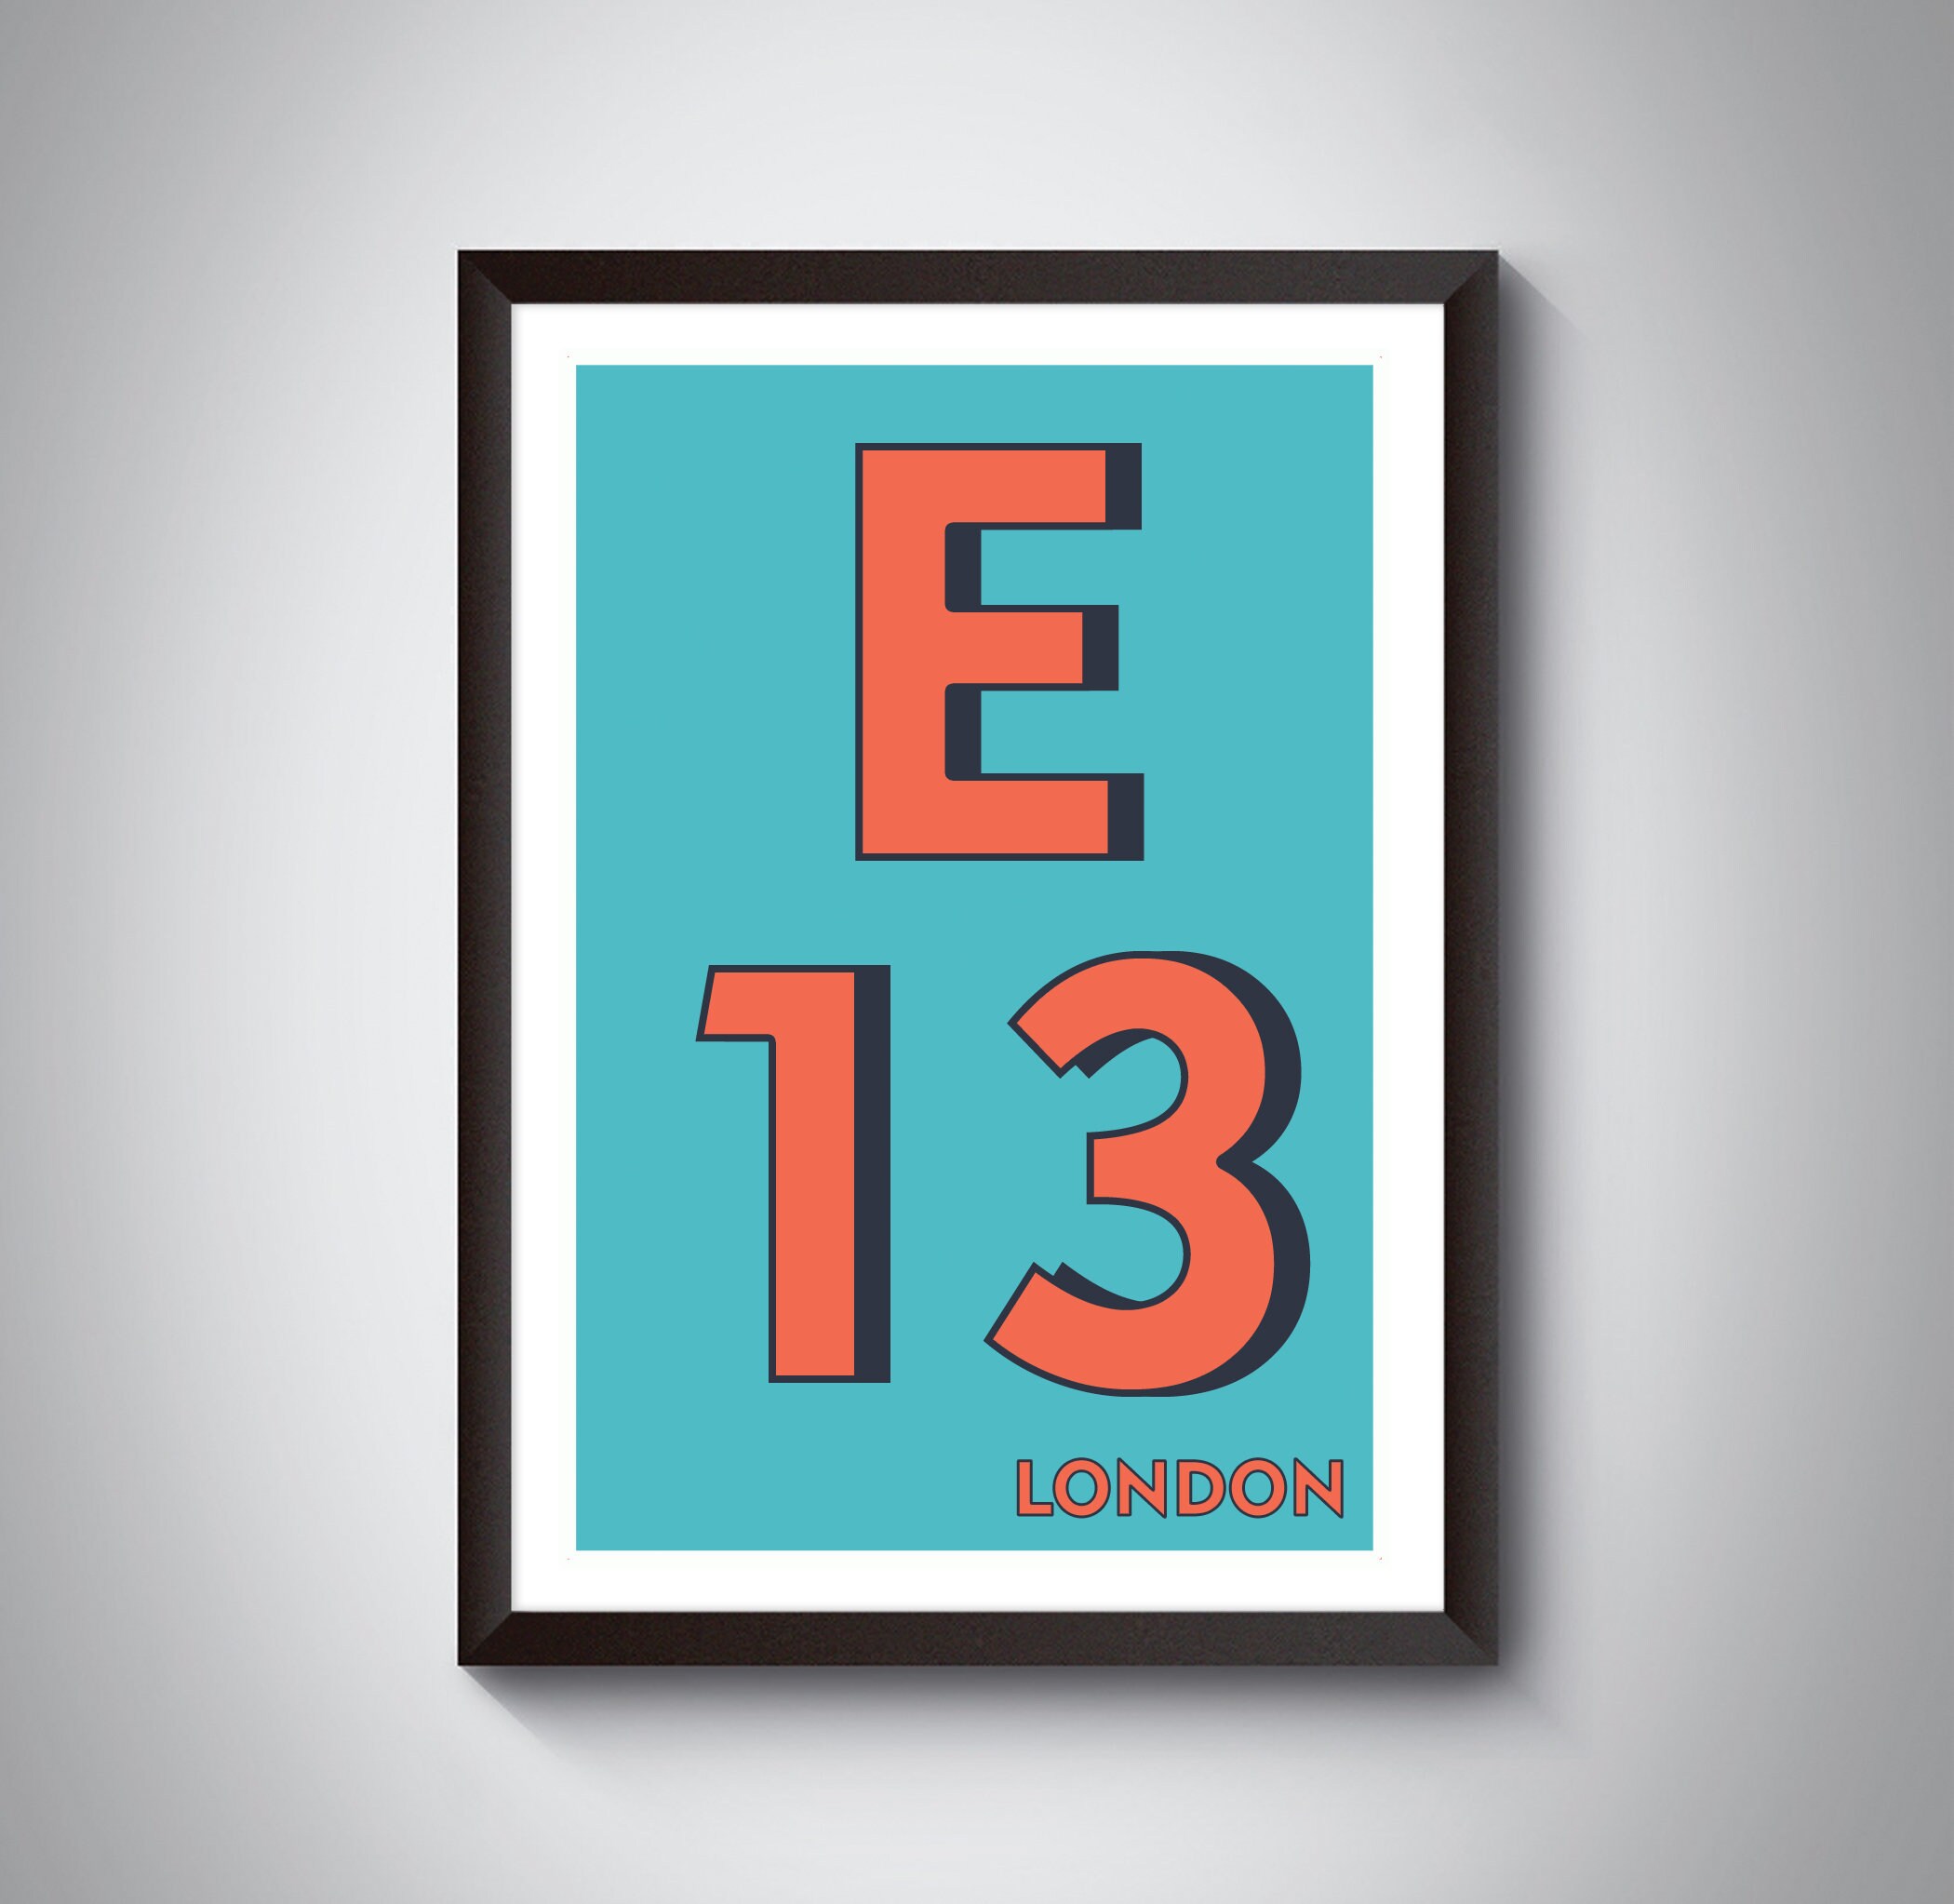 E13 Plaistow East Ham Stratford Poplar London Print.